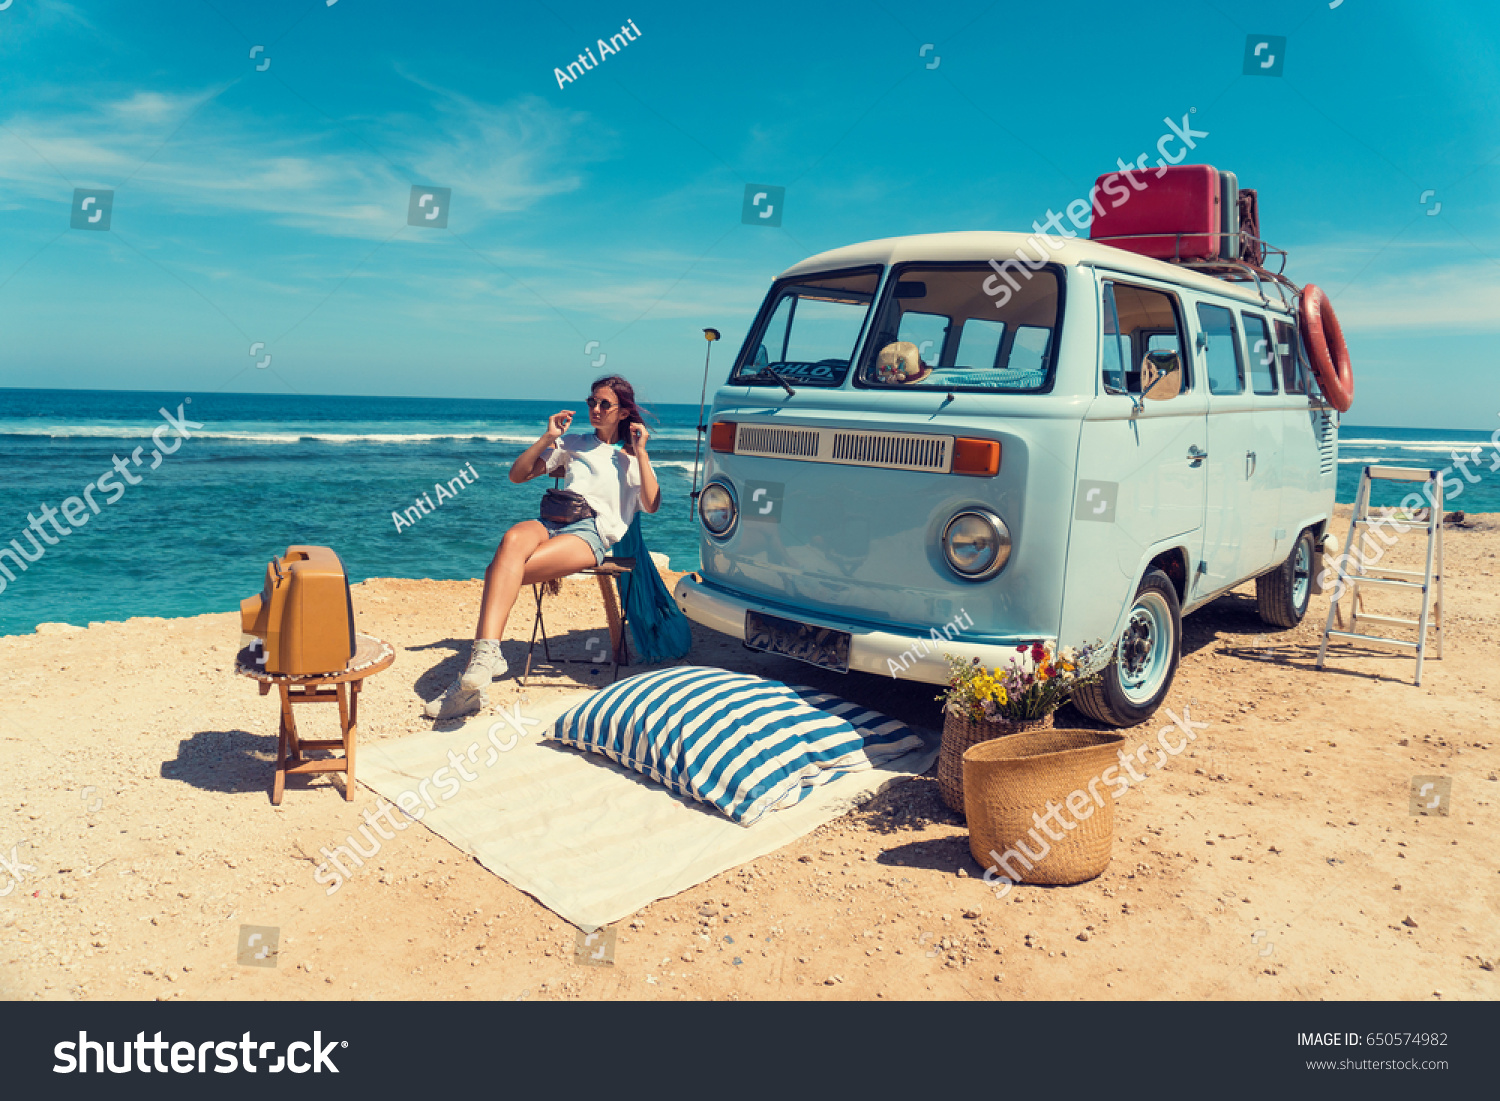 5,988 Beach posing teens Images, Stock Photos & Vectors | Shutterstock